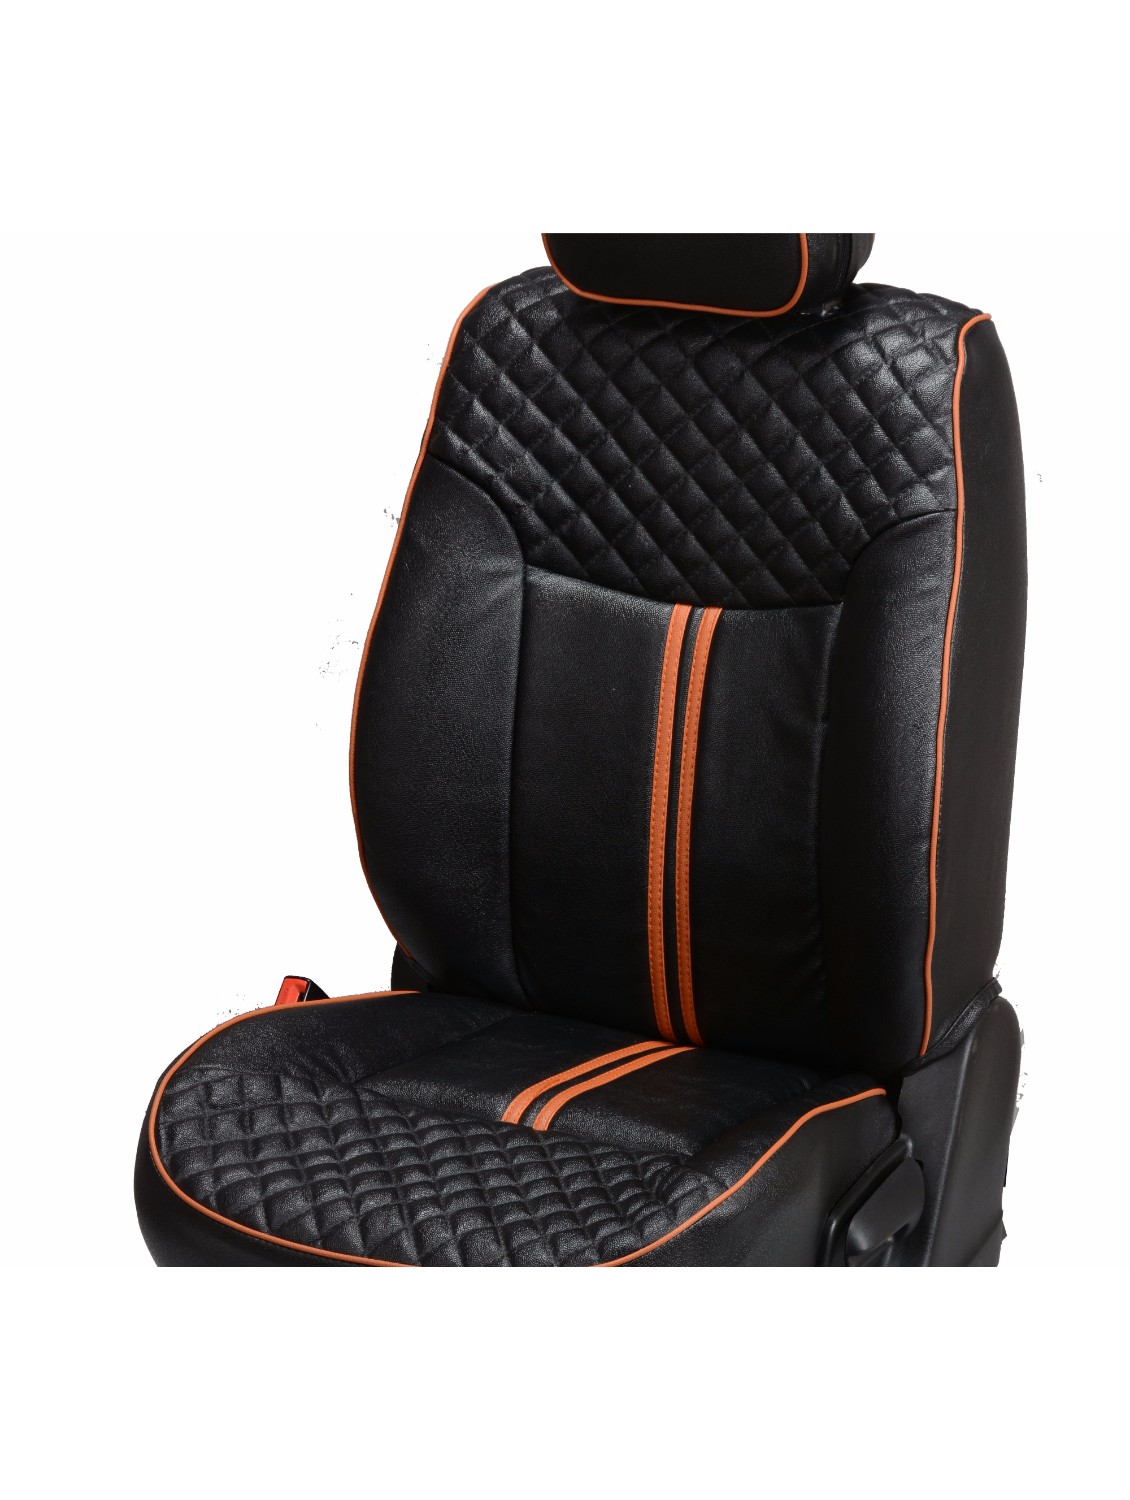 Buy Pegasus Premium PU Leather Car Seat Cover for Maruti Vitara Brezza